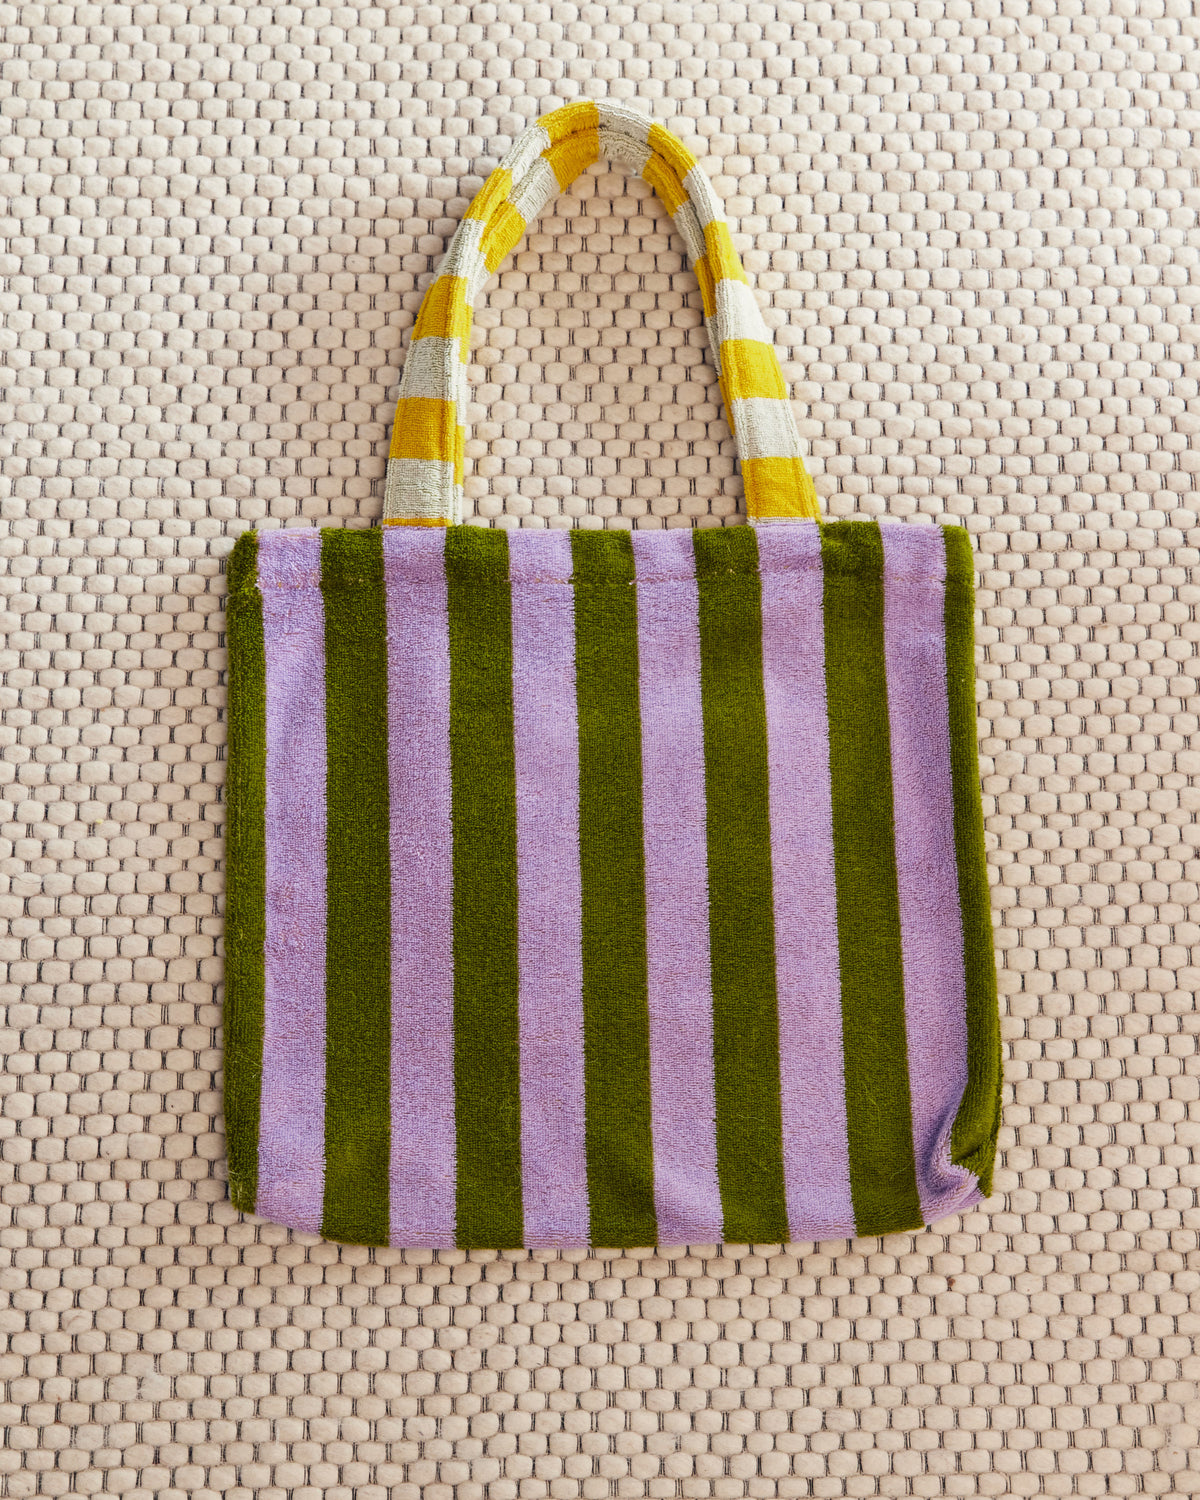 She stripes sea stripes in a tote bag.